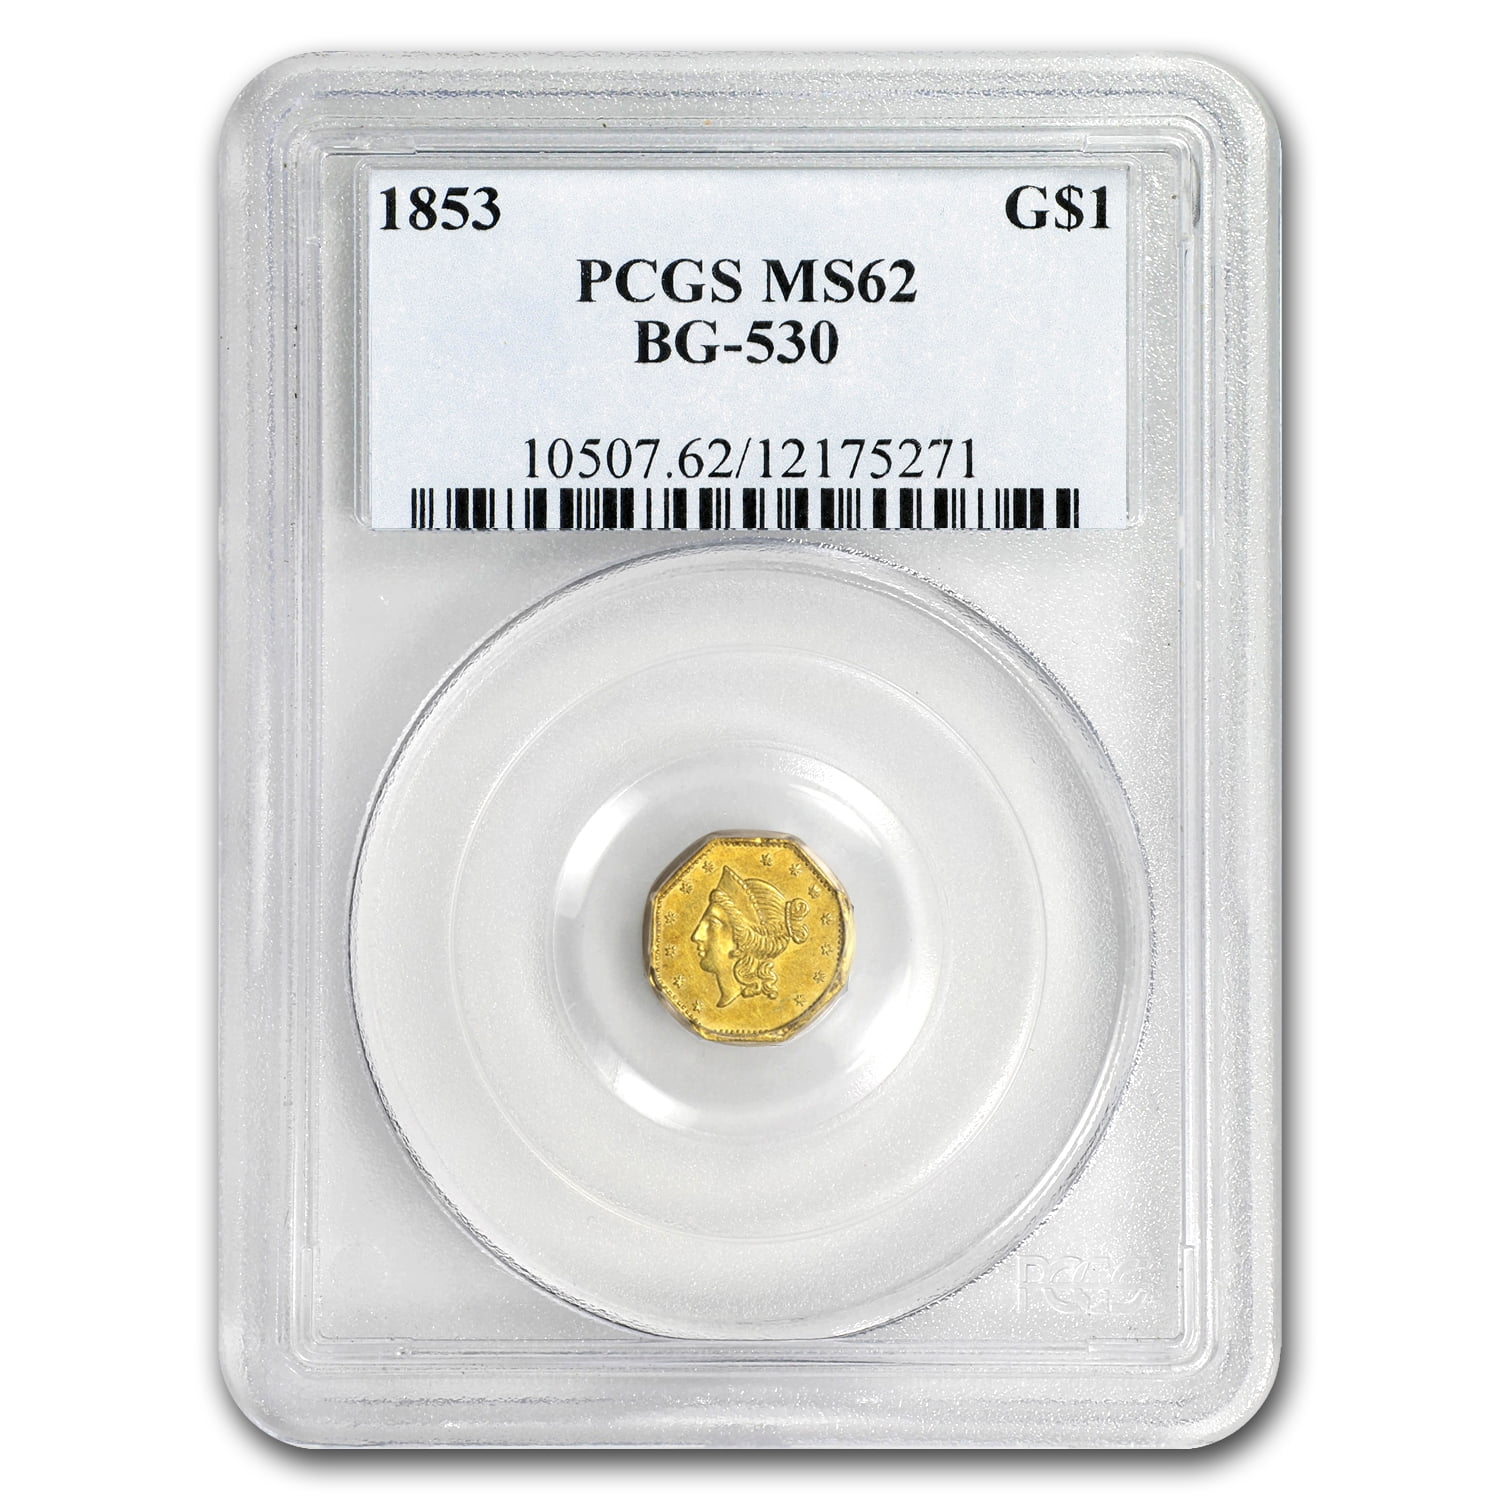 1853 G$1 Liberty Head Gold Dollar NGC MS 63- Free Shipping USA